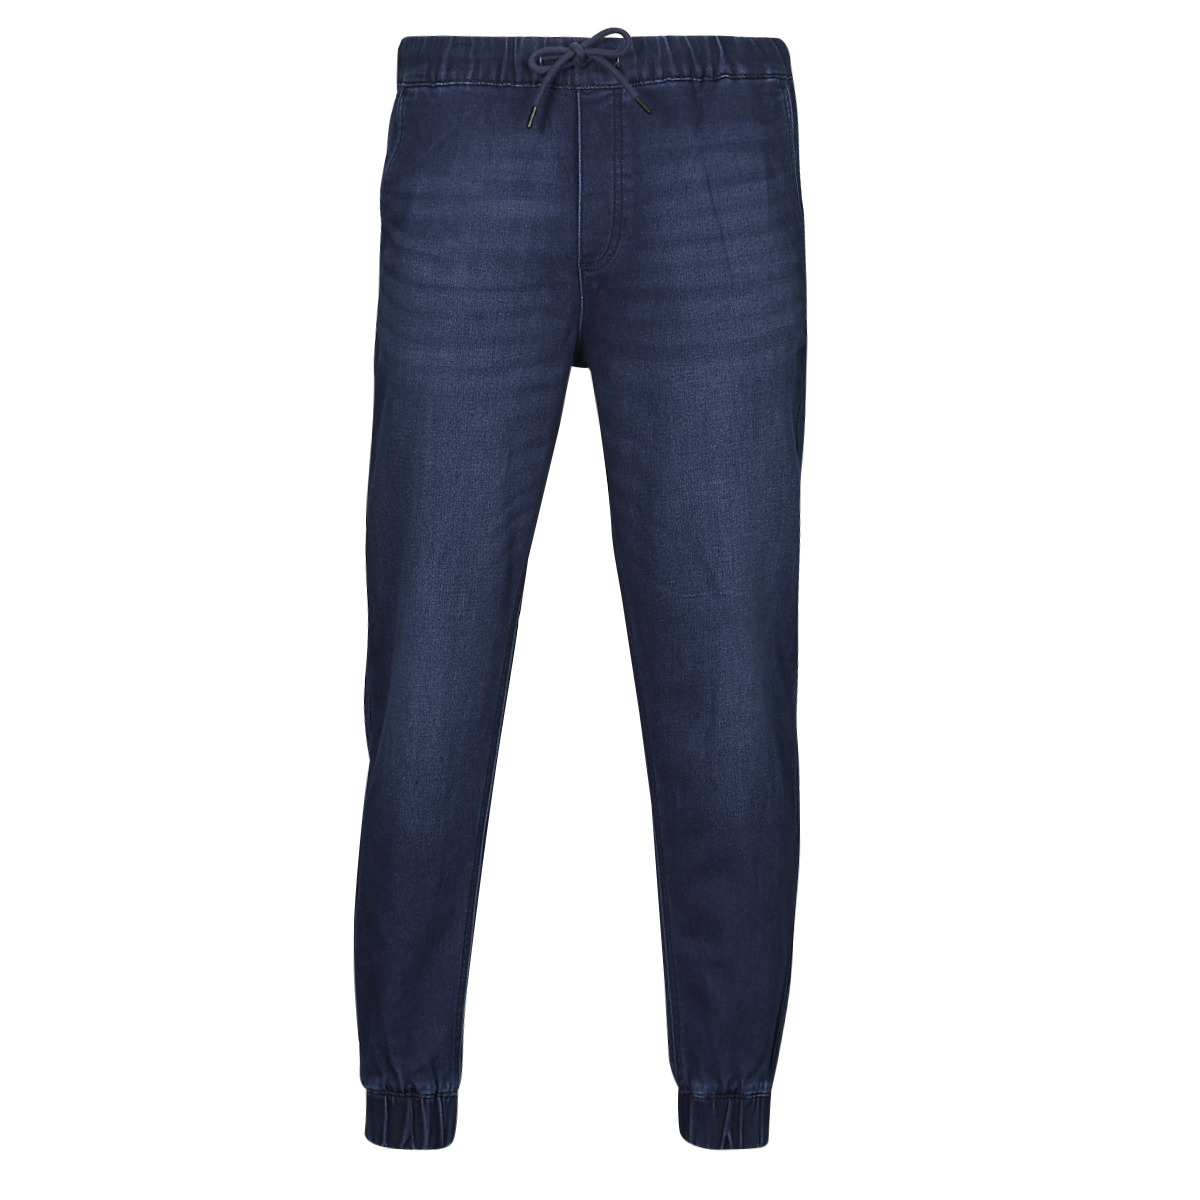 Kleidung Herren Joggs Jeans/enge Bundhosen Jack & Jones JJIGORDON JJDAVE I.K. SQ 716 Blau